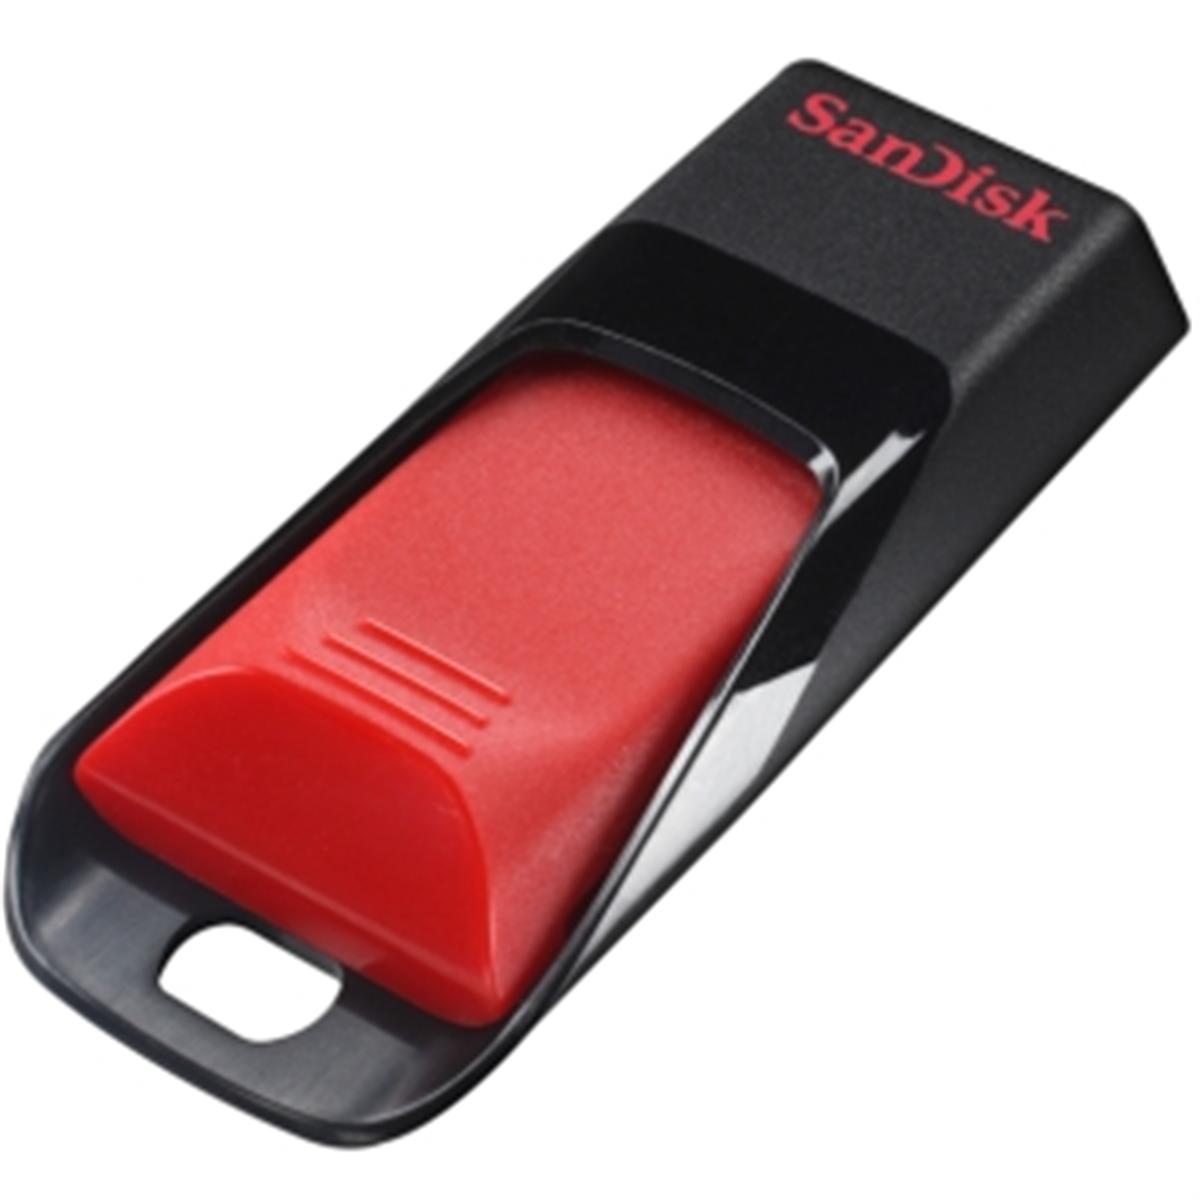  Memorie USB SanDisk Cruzer Edge SDCZ51, 16GB, USB 2.0, Negru/Rosu 